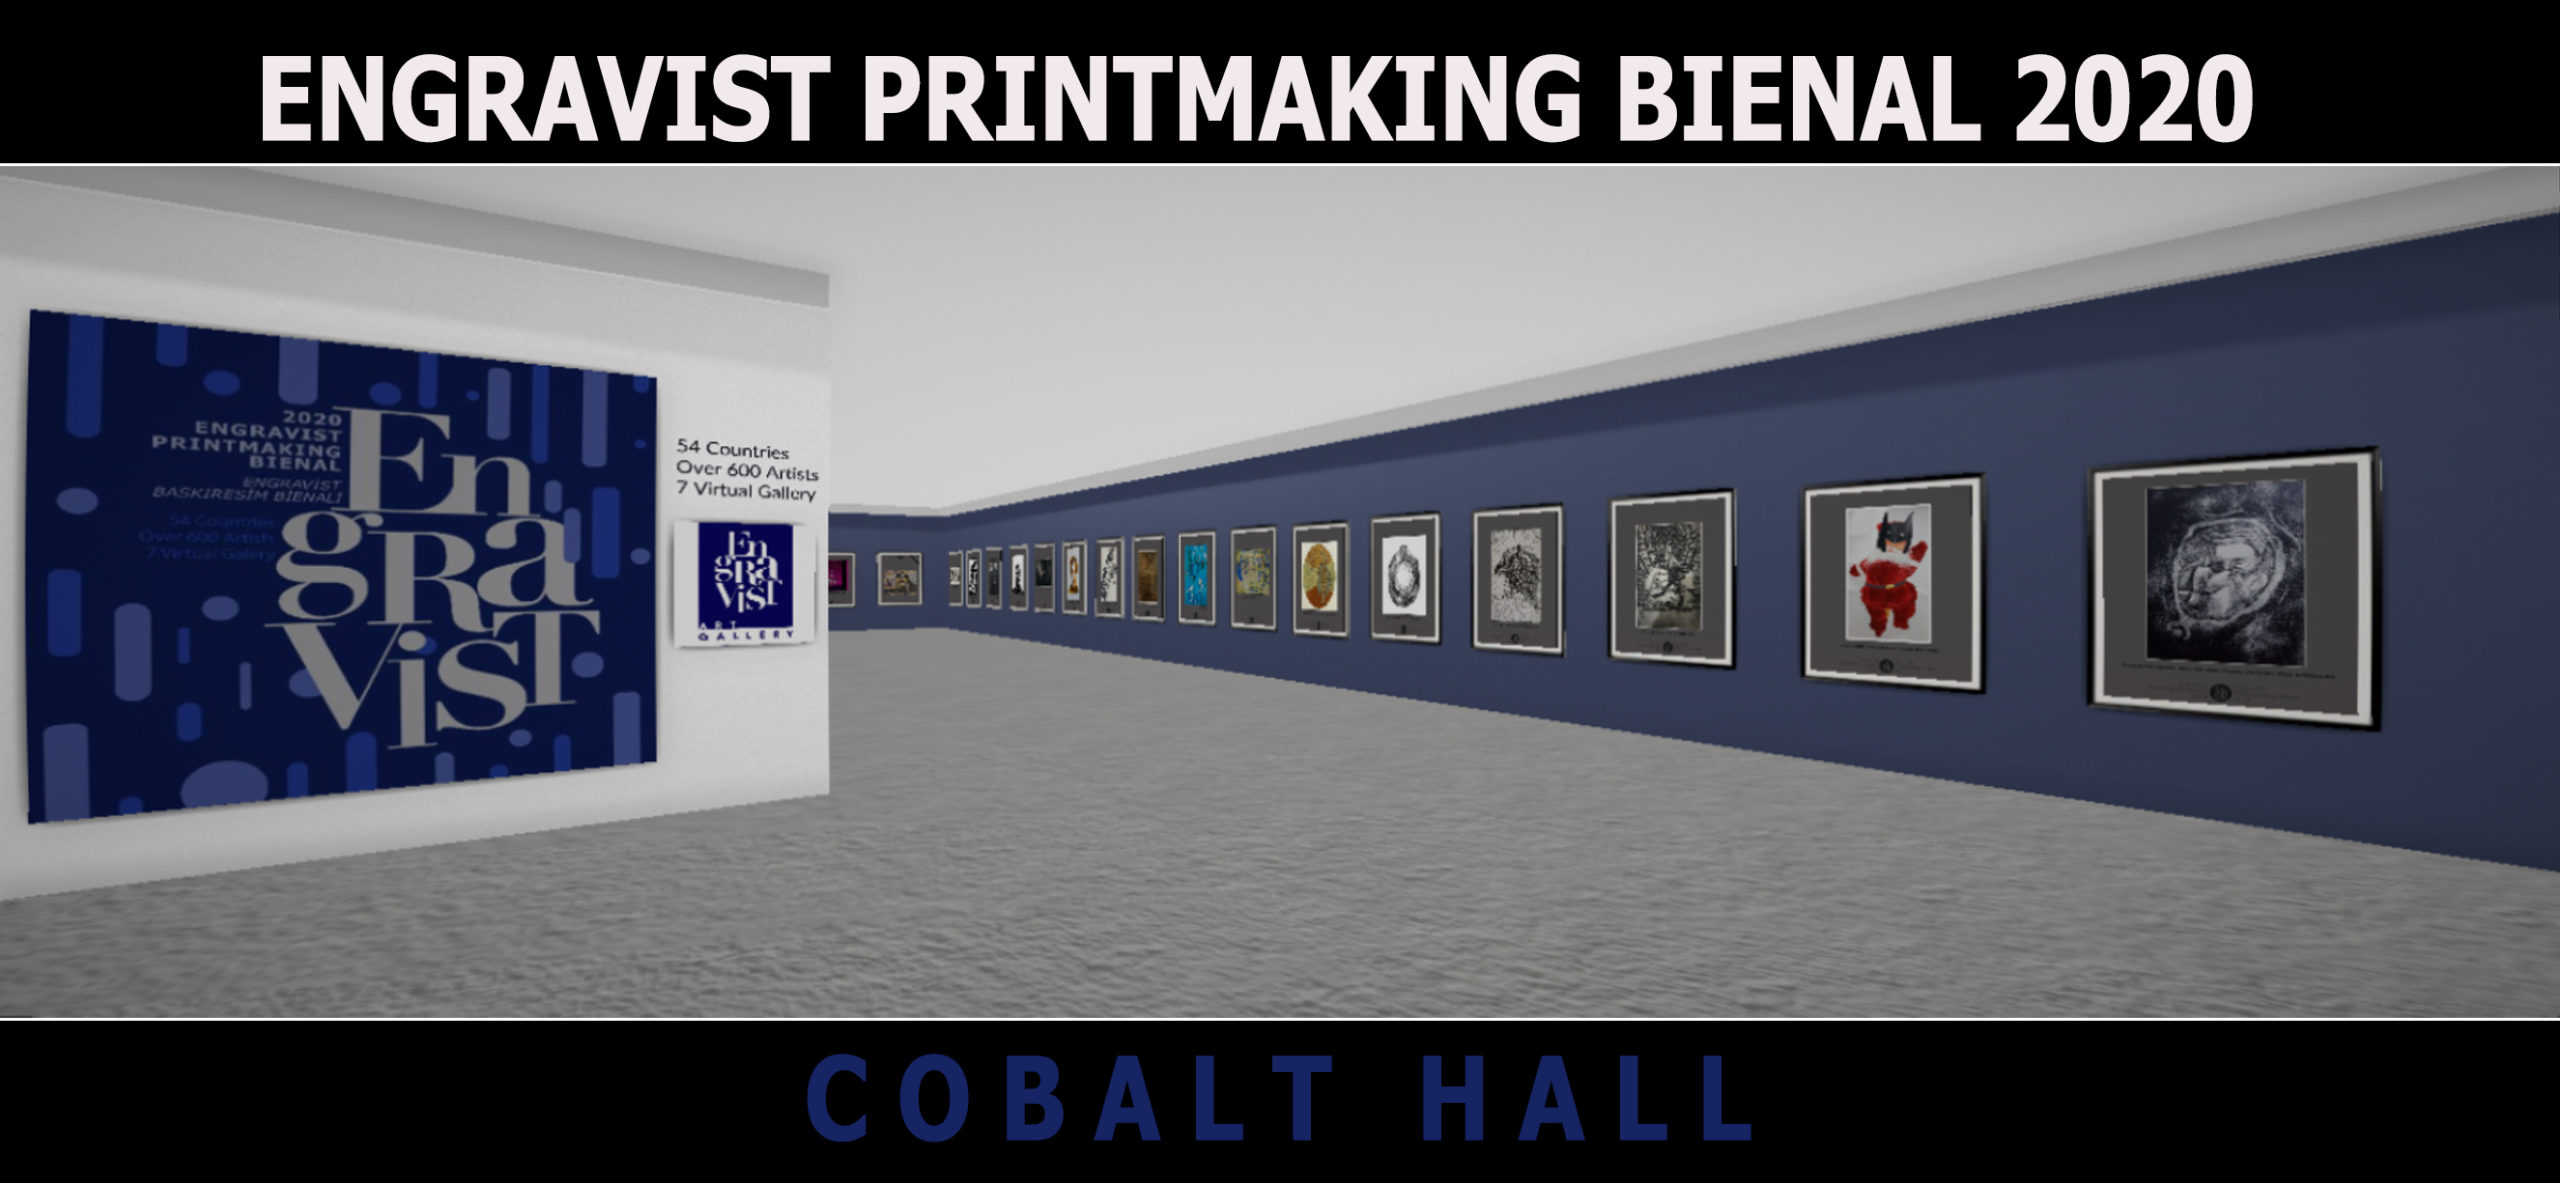 International Virtual Engravist Printmaking Bienal – Cobalt Hall